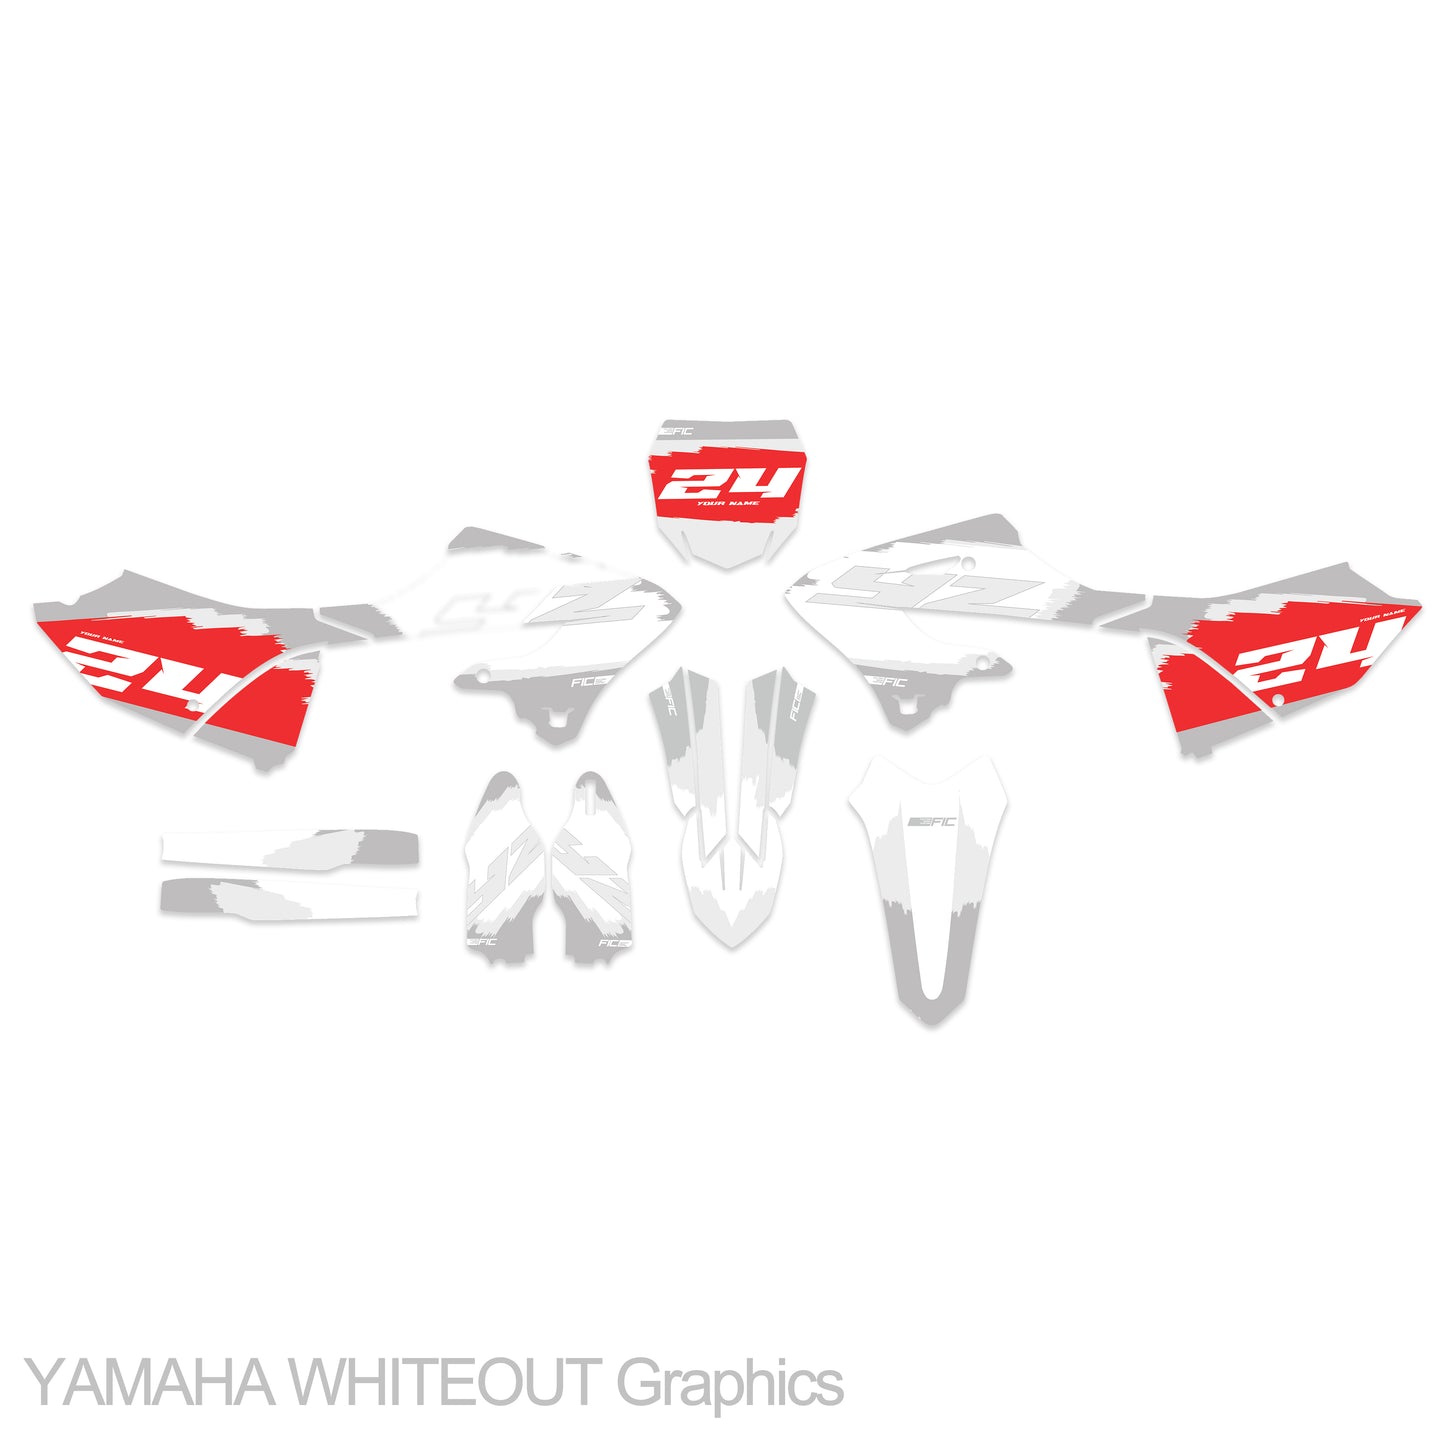 YAMAHA YZ 450F 2008 - 2009 WHITEOUT Graphics kit